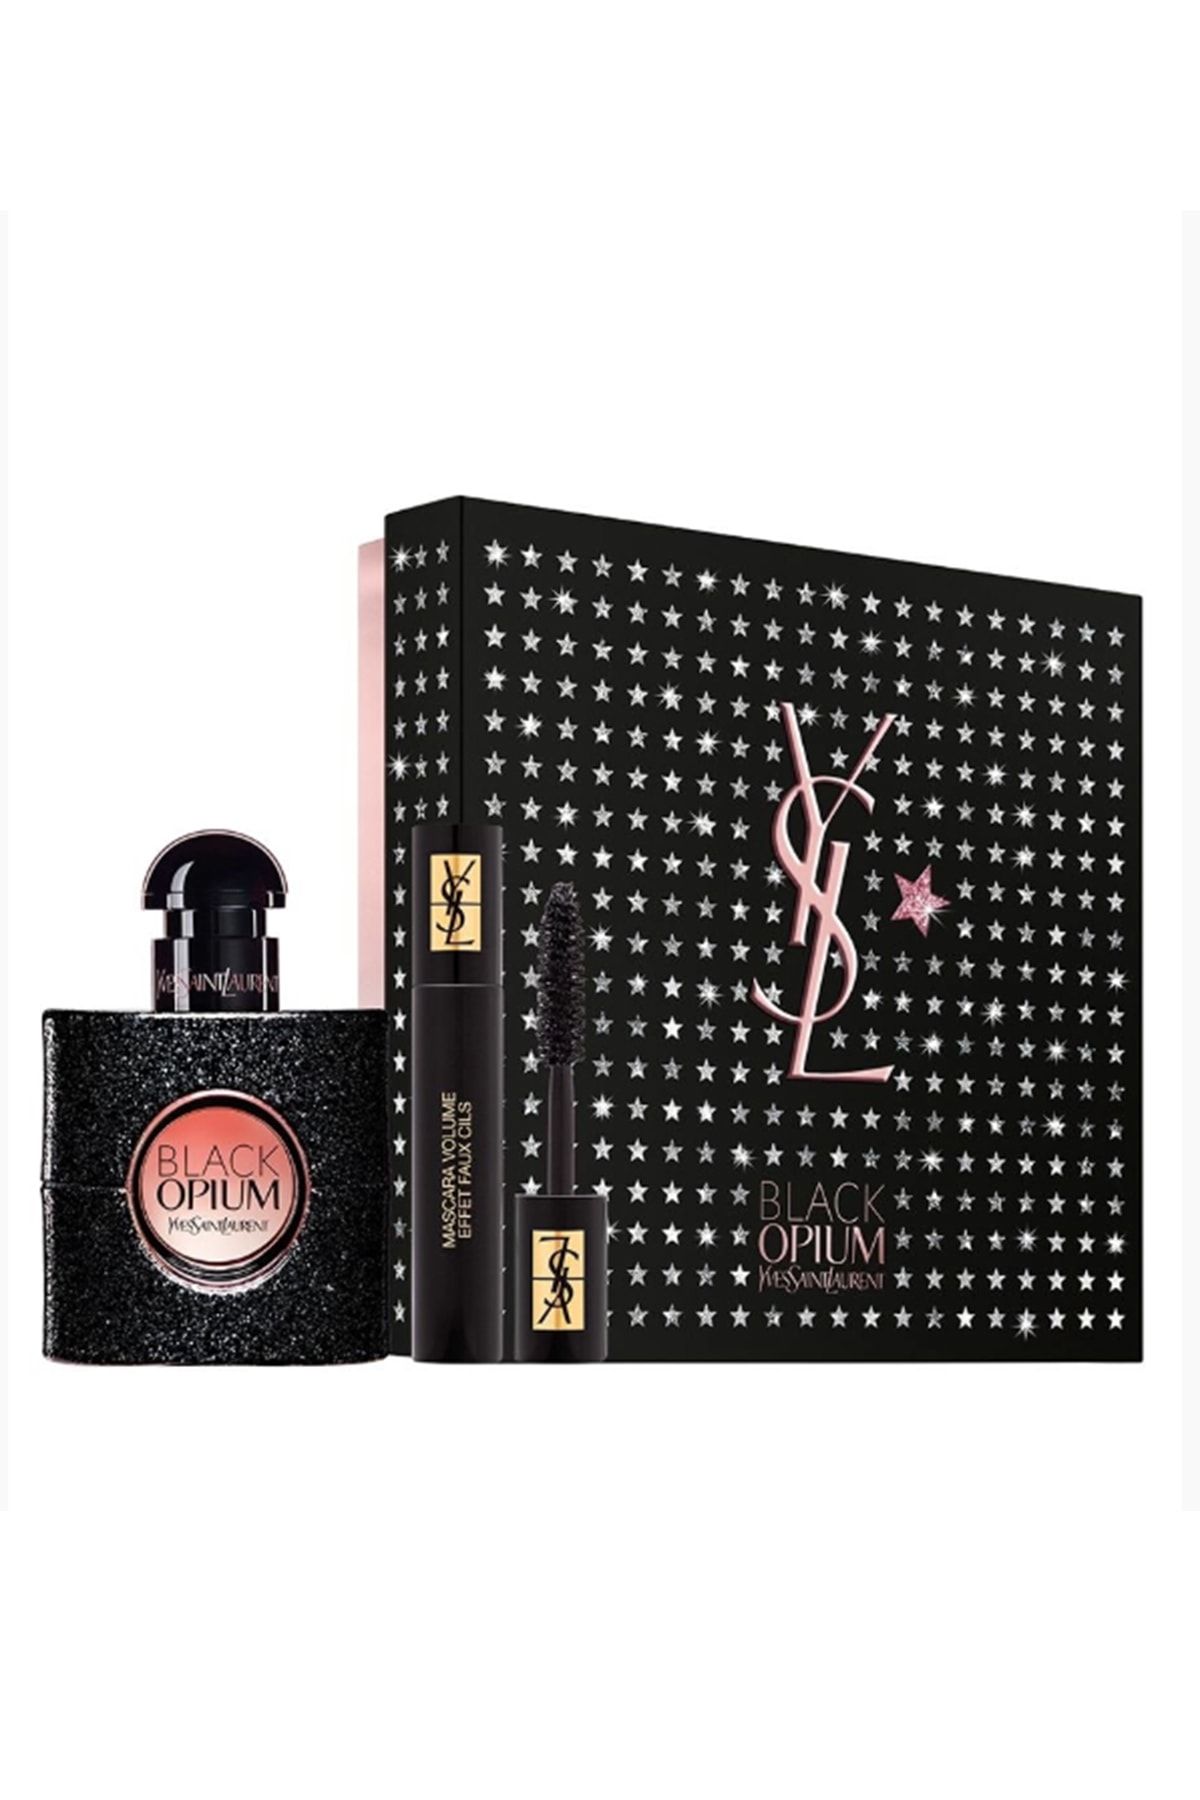 Yves Saint Laurent Black Opium Edp 30 ml + Mini Mascara Volume Effect 3614272848498